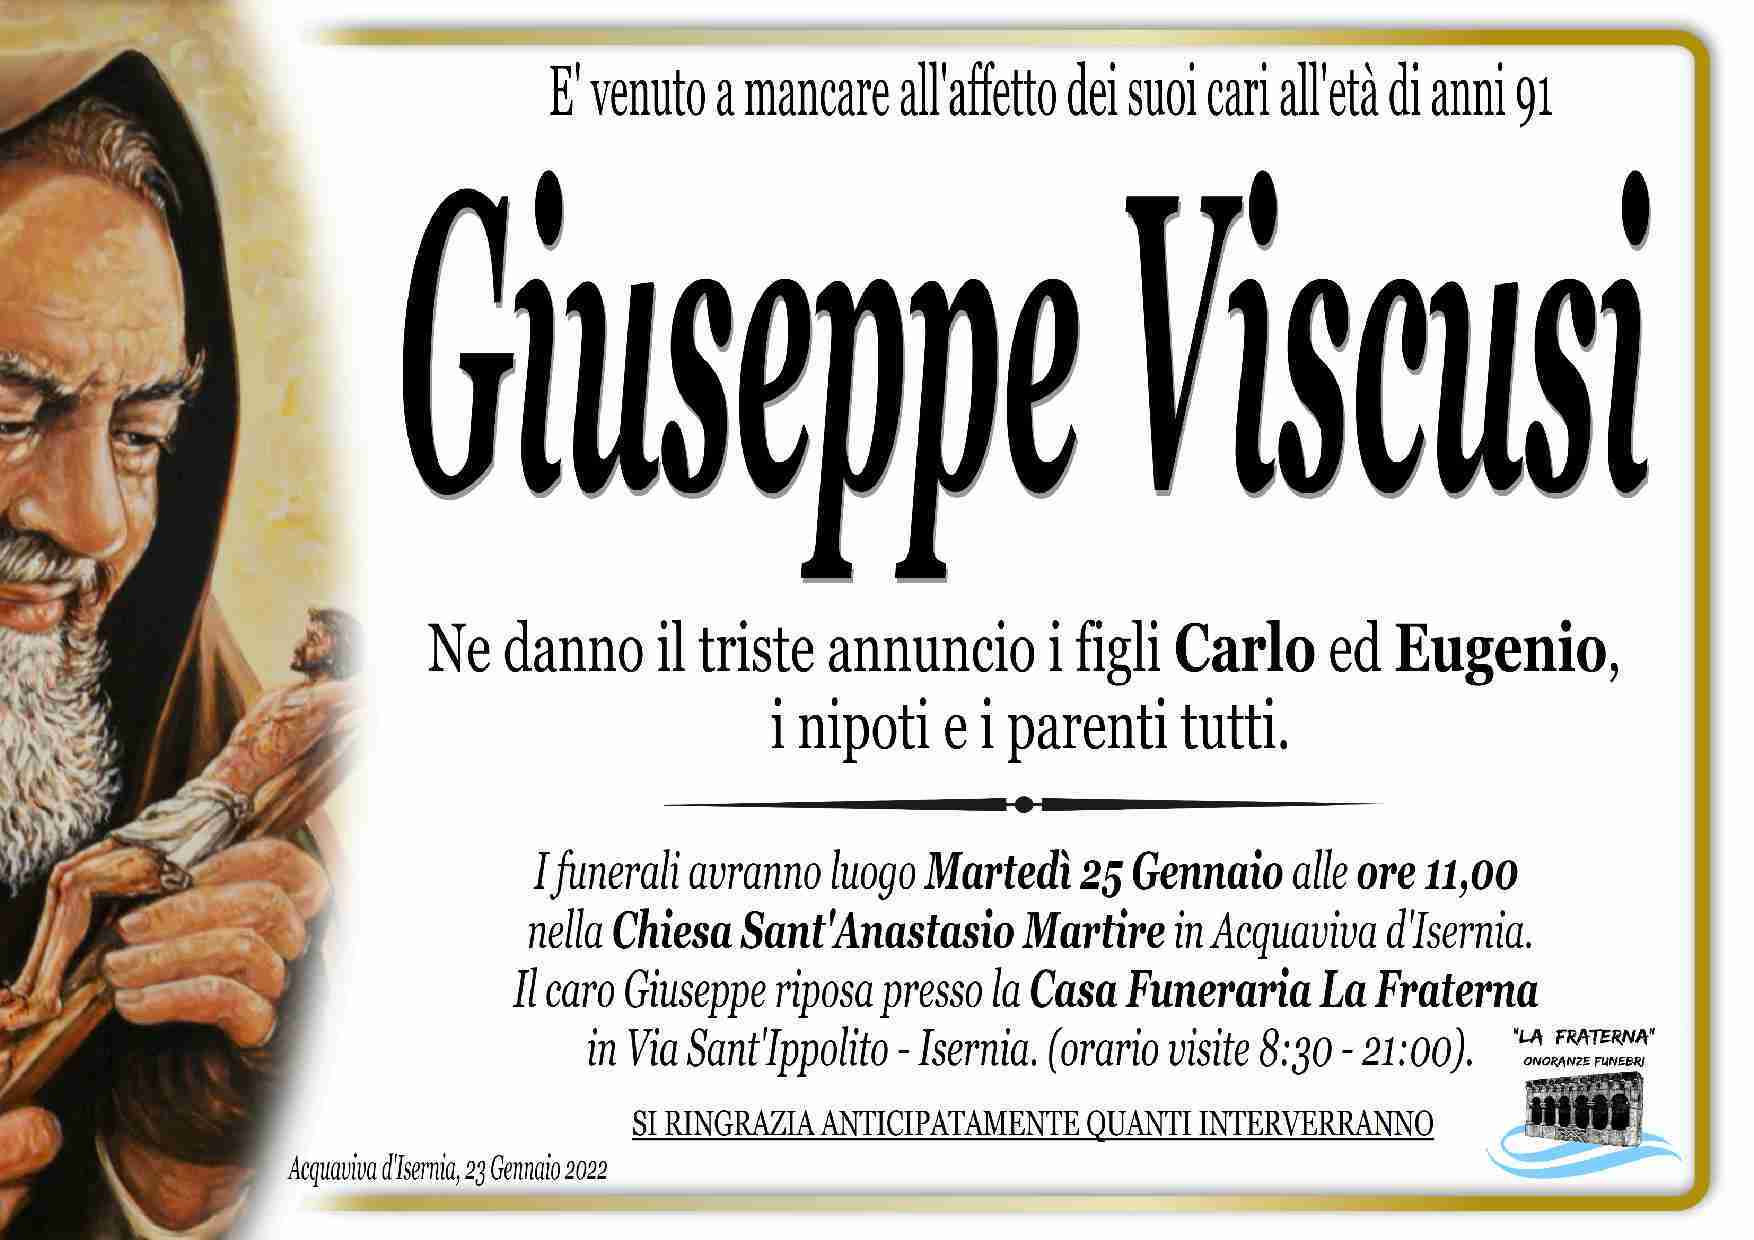 Giuseppe Viscusi